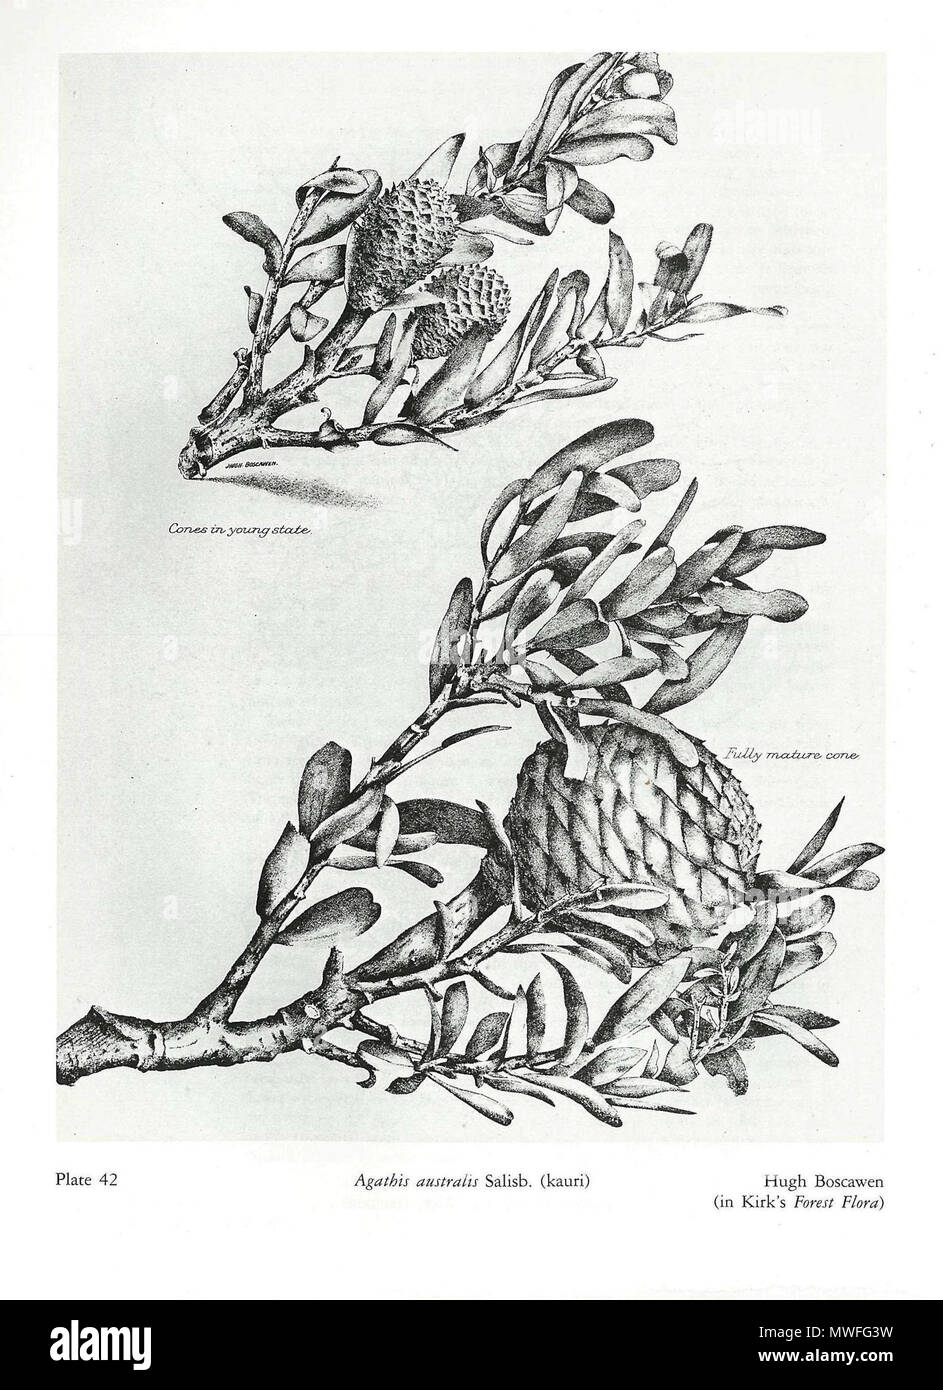 . English: Plate 42 Agathis australis Salisb. (kauri), John Hugh Boscawen (1851-1937) (in Kirk's Forest Flora) . 1889. Thomas Kirk (1828-1898) 341 Kirk's Forest Flora of New Zealand42 Stock Photo